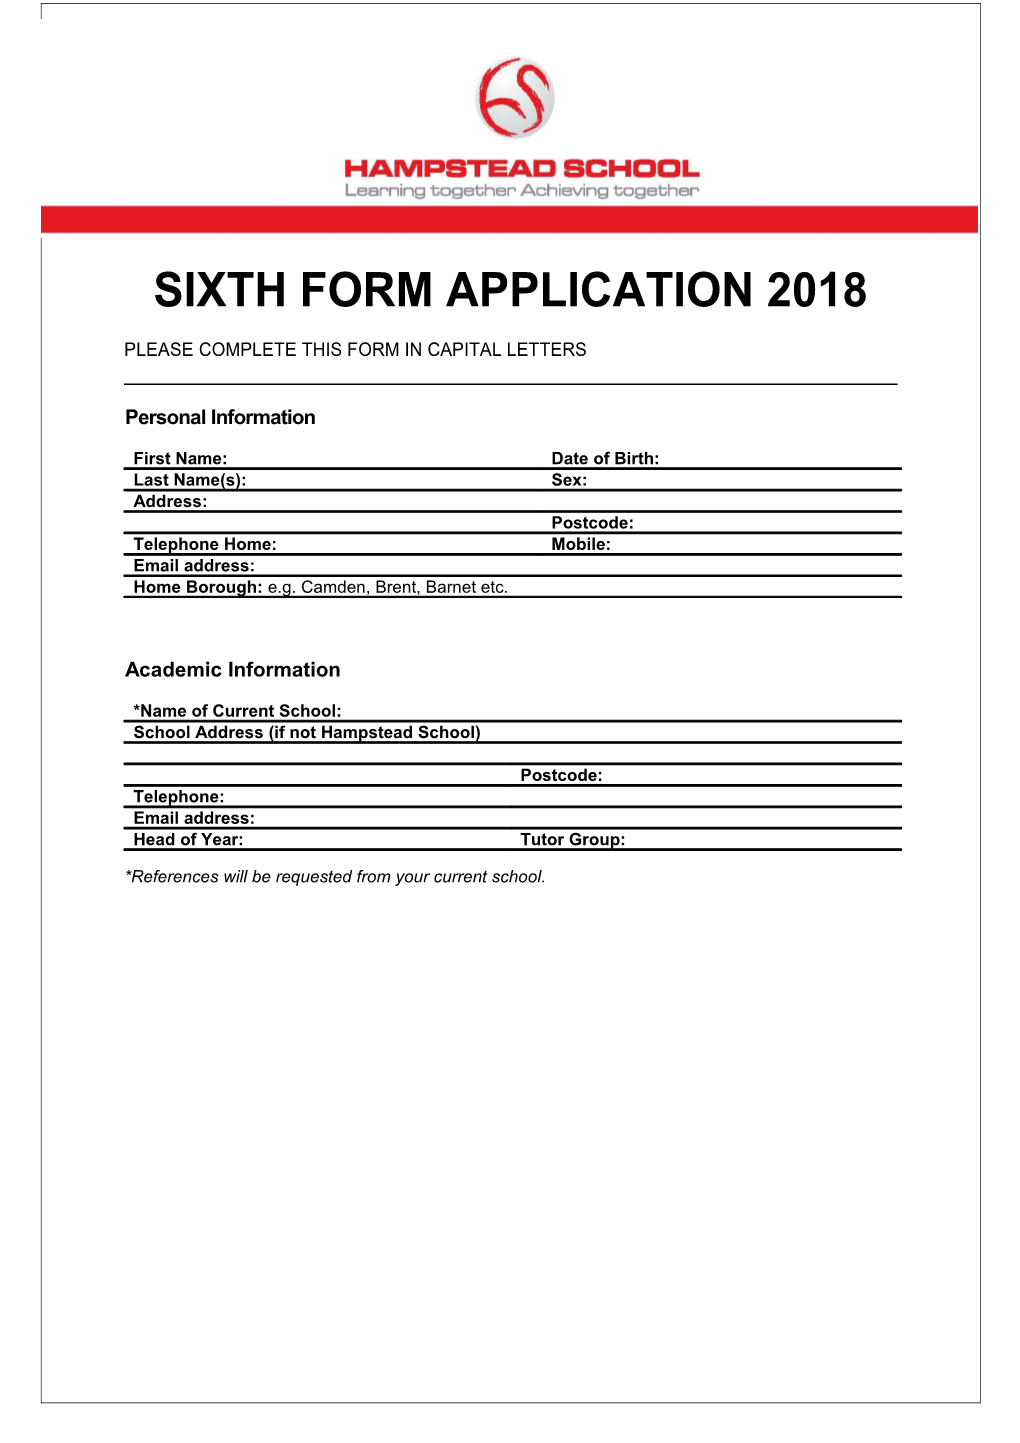 Sixth Form Application 2018